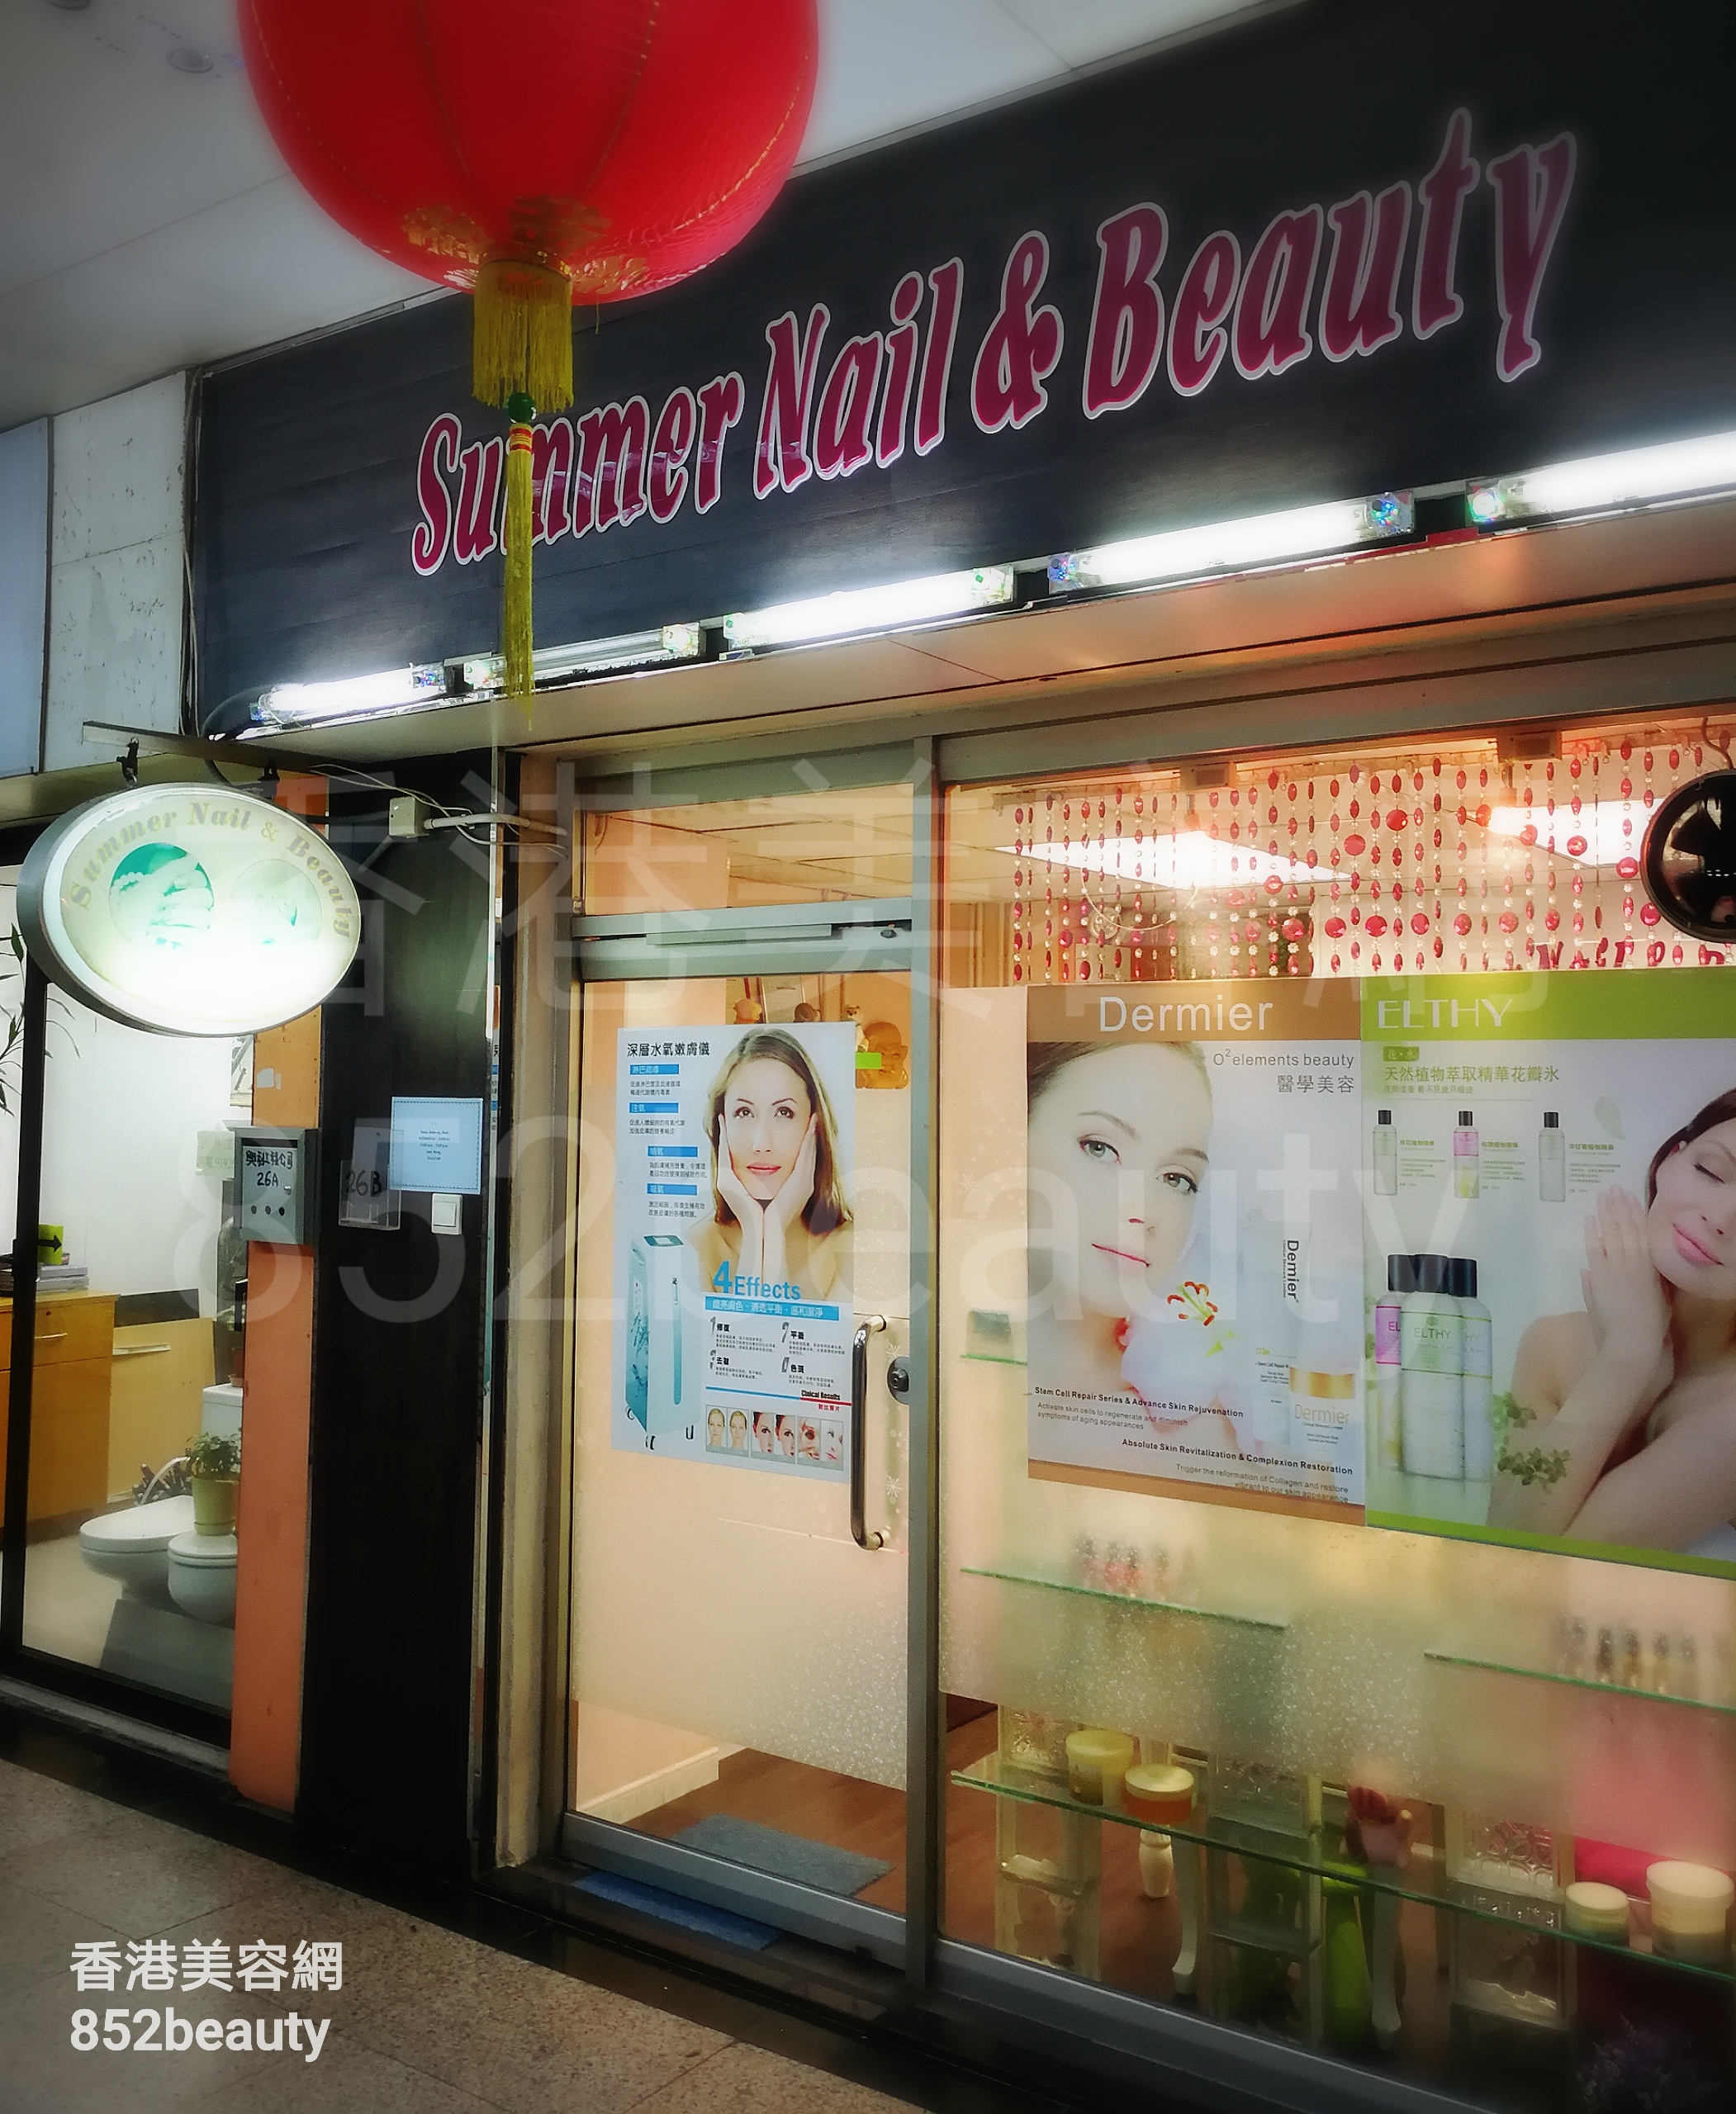 香港美容網 Hong Kong Beauty Salon 美容院 / 美容師: Summer Nail & Beauty